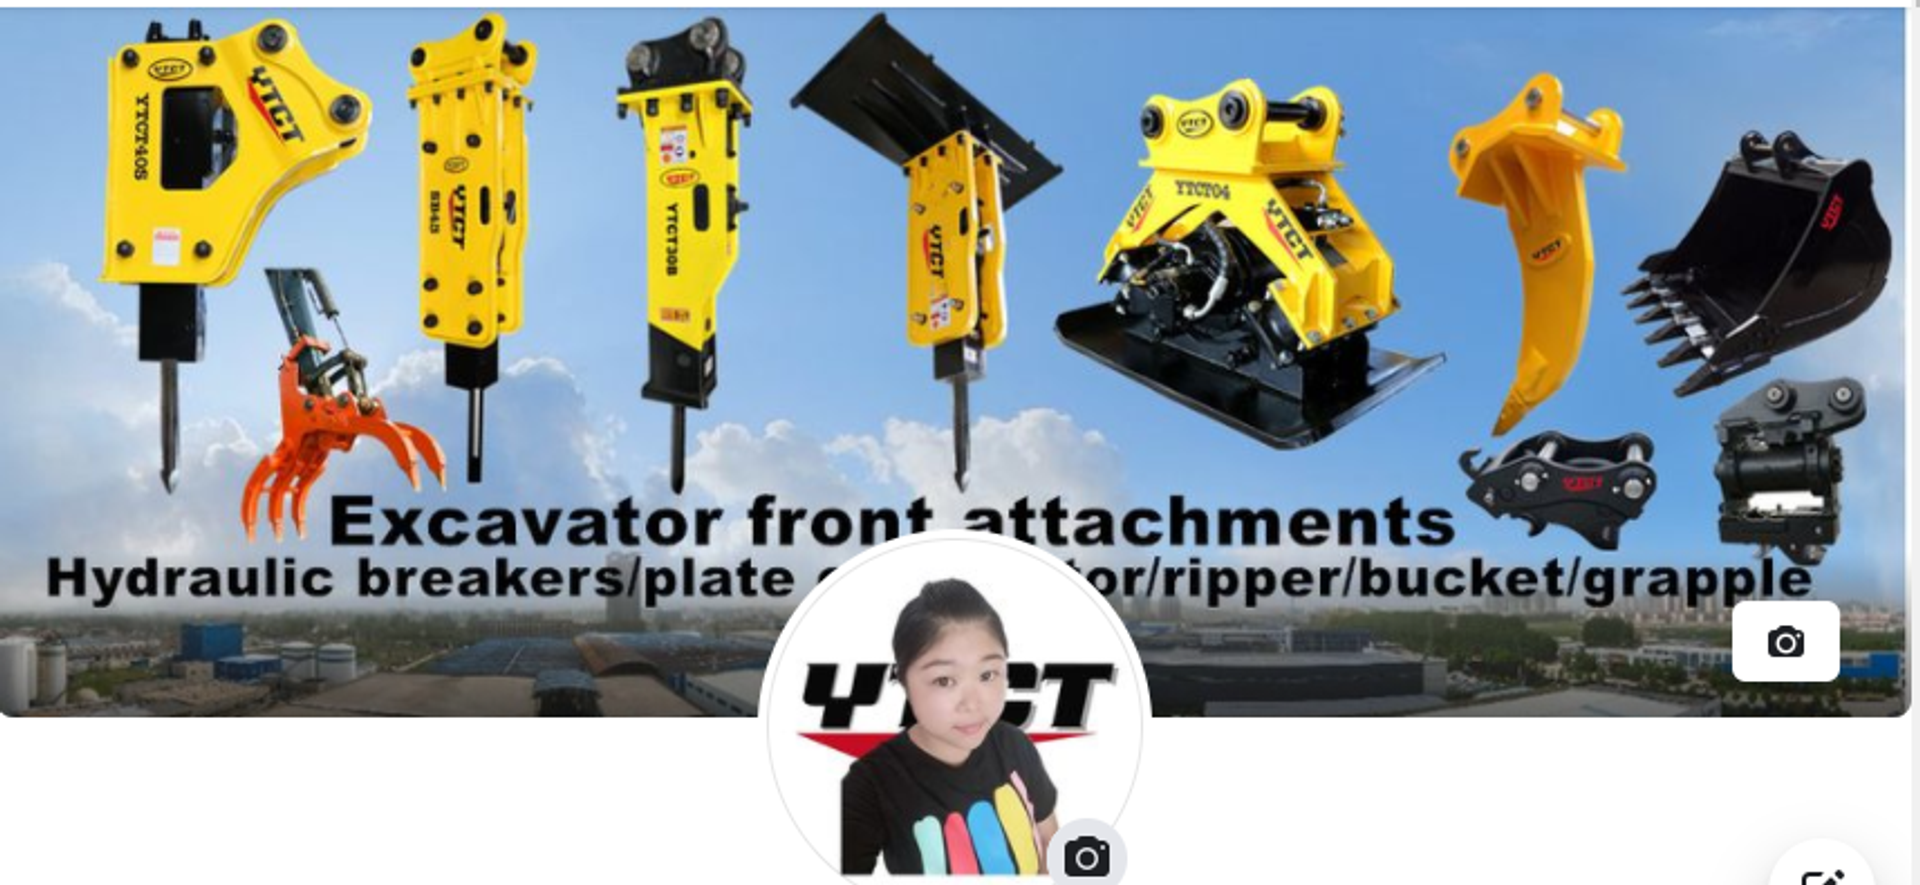 Yantai Chengtai Construction Machinery Co., Ltd.